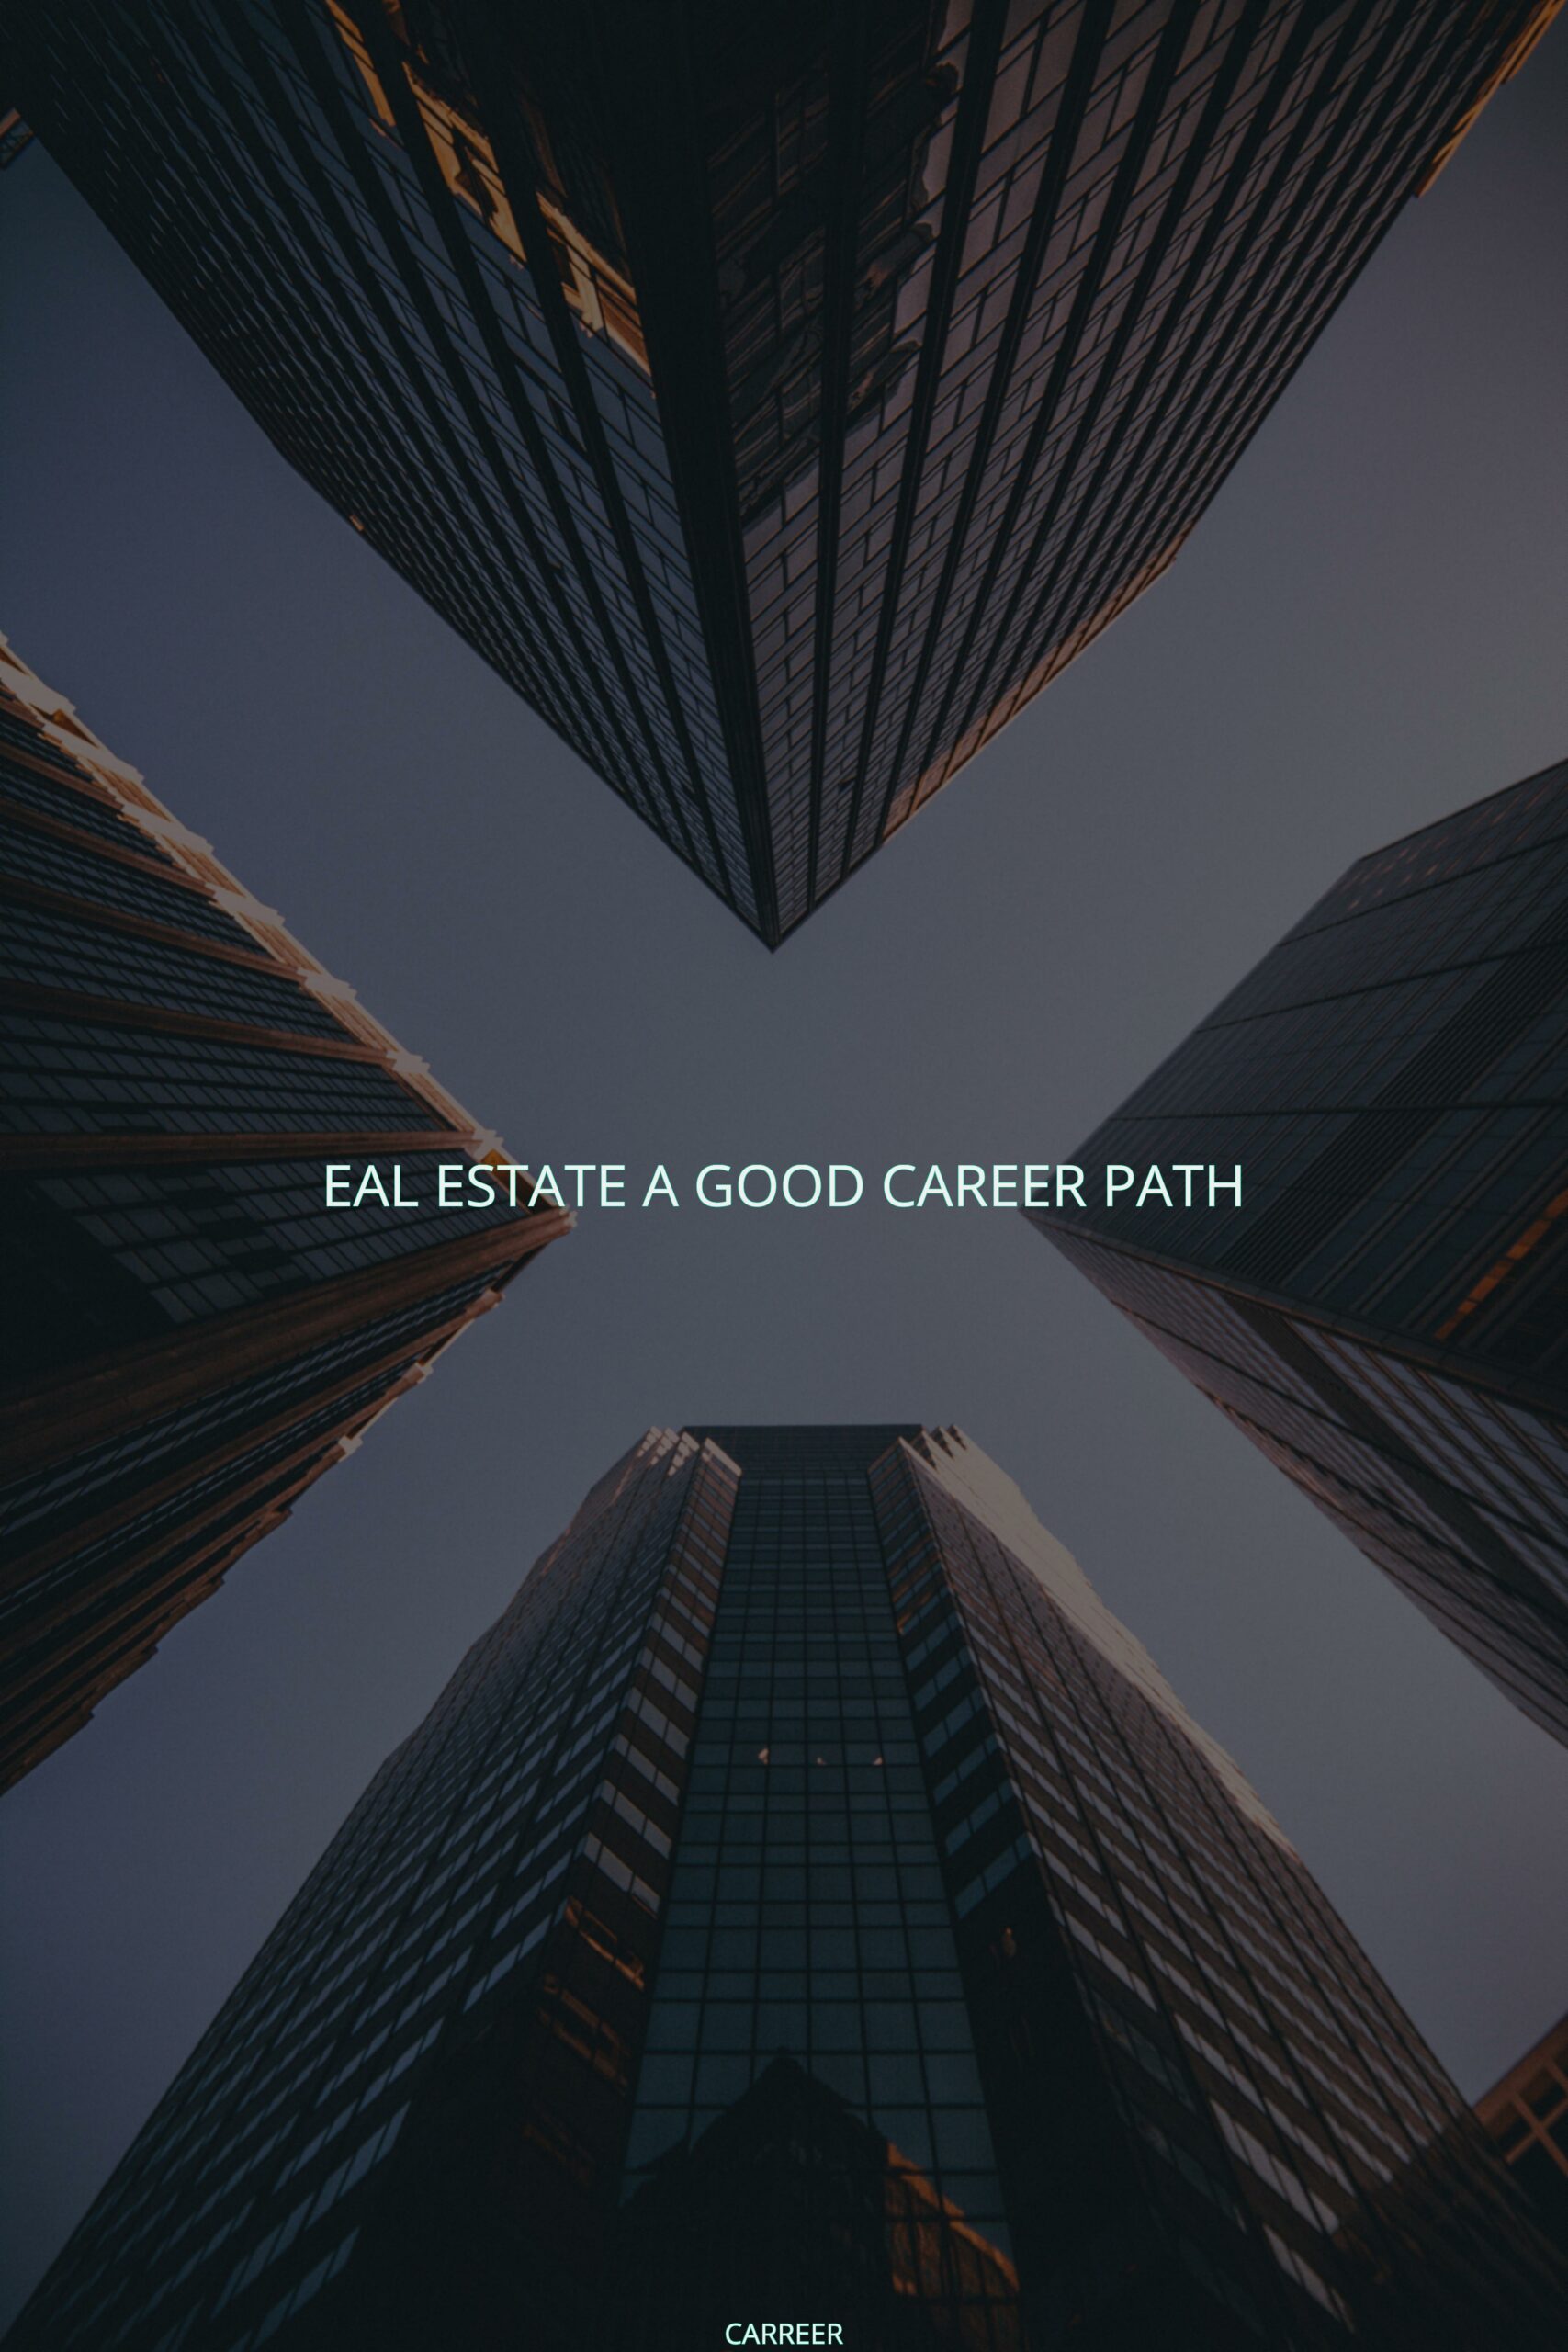 Eal estate a good career path